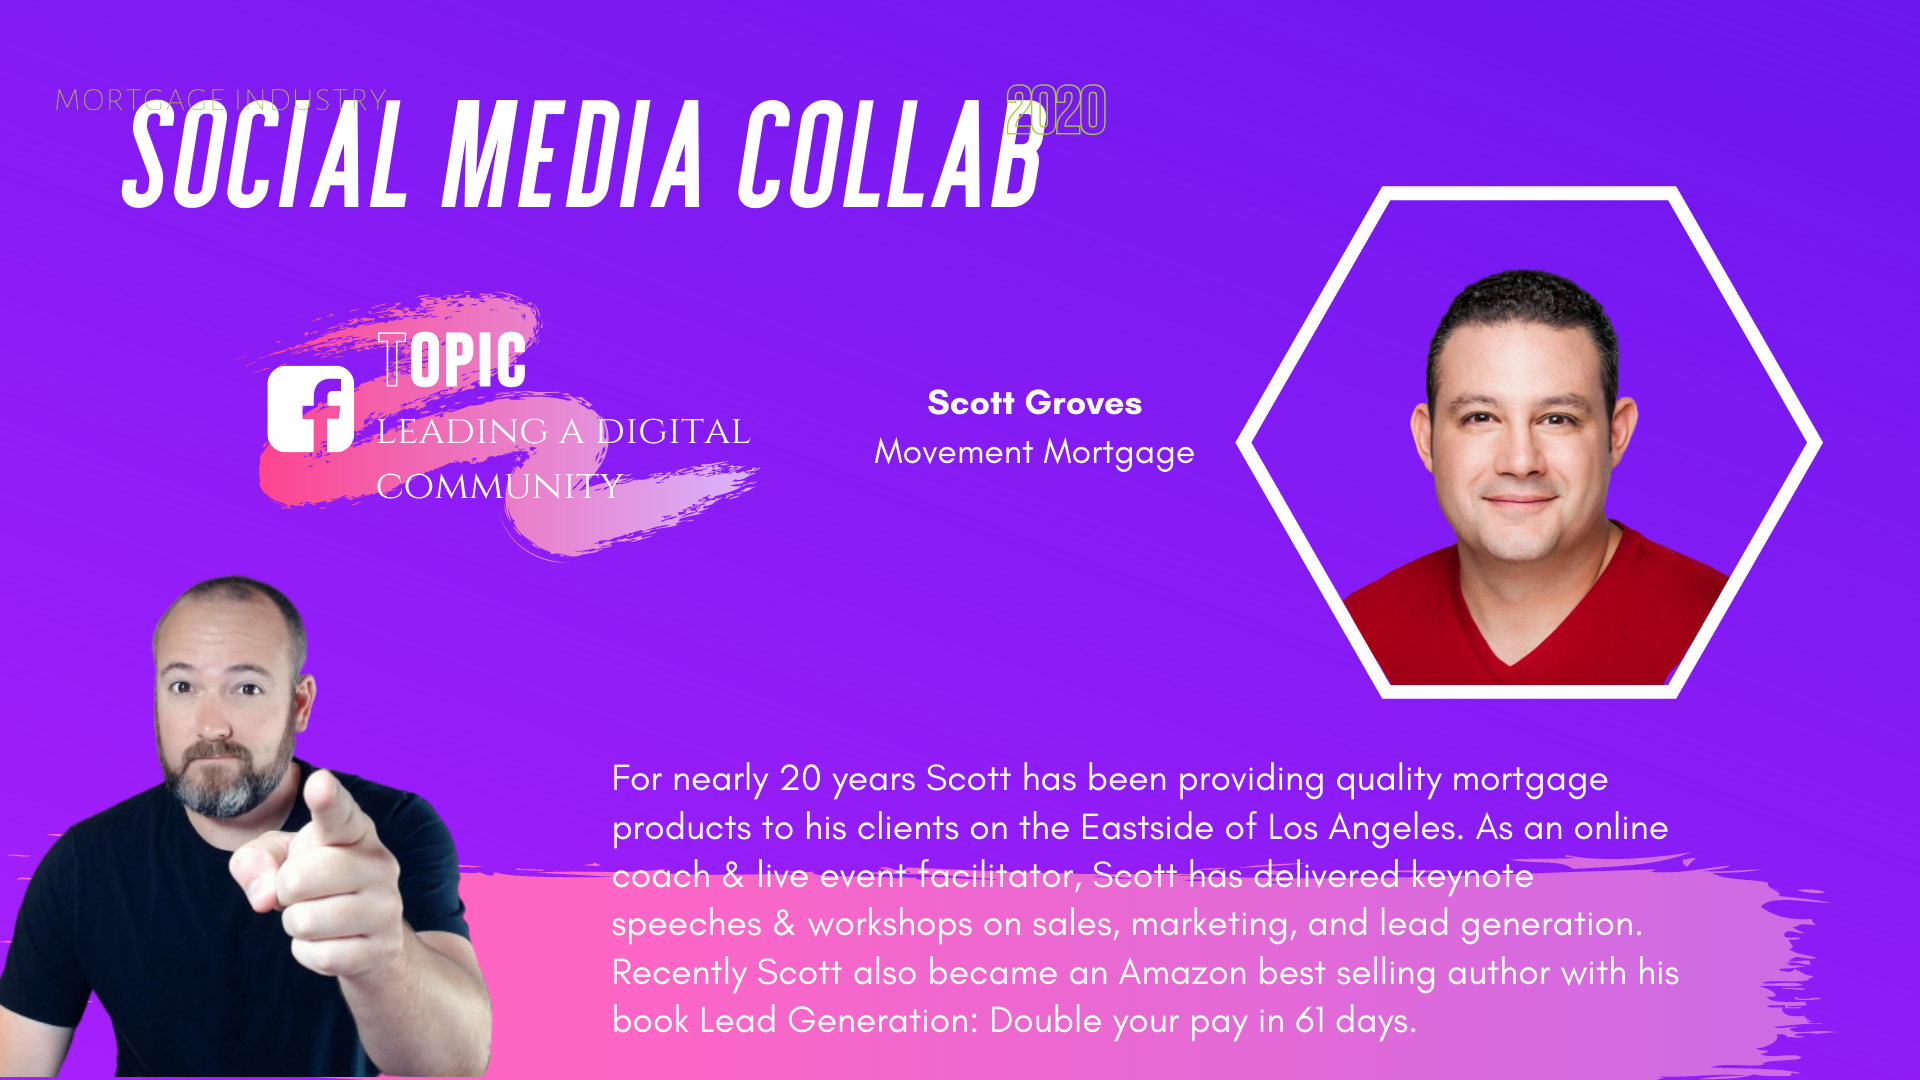 Leading a Digital Community | Scott Groves